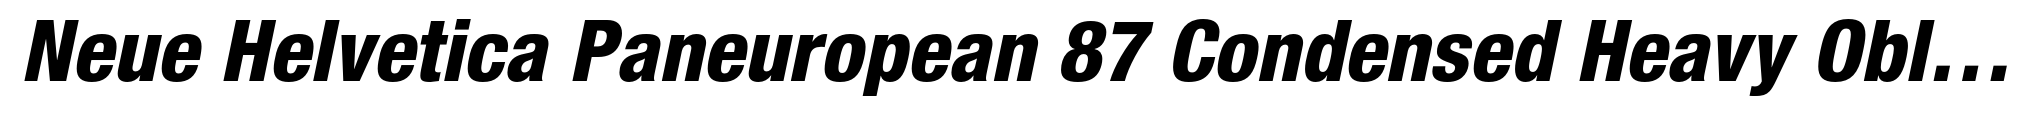 Neue Helvetica Paneuropean 87 Condensed Heavy Oblique image